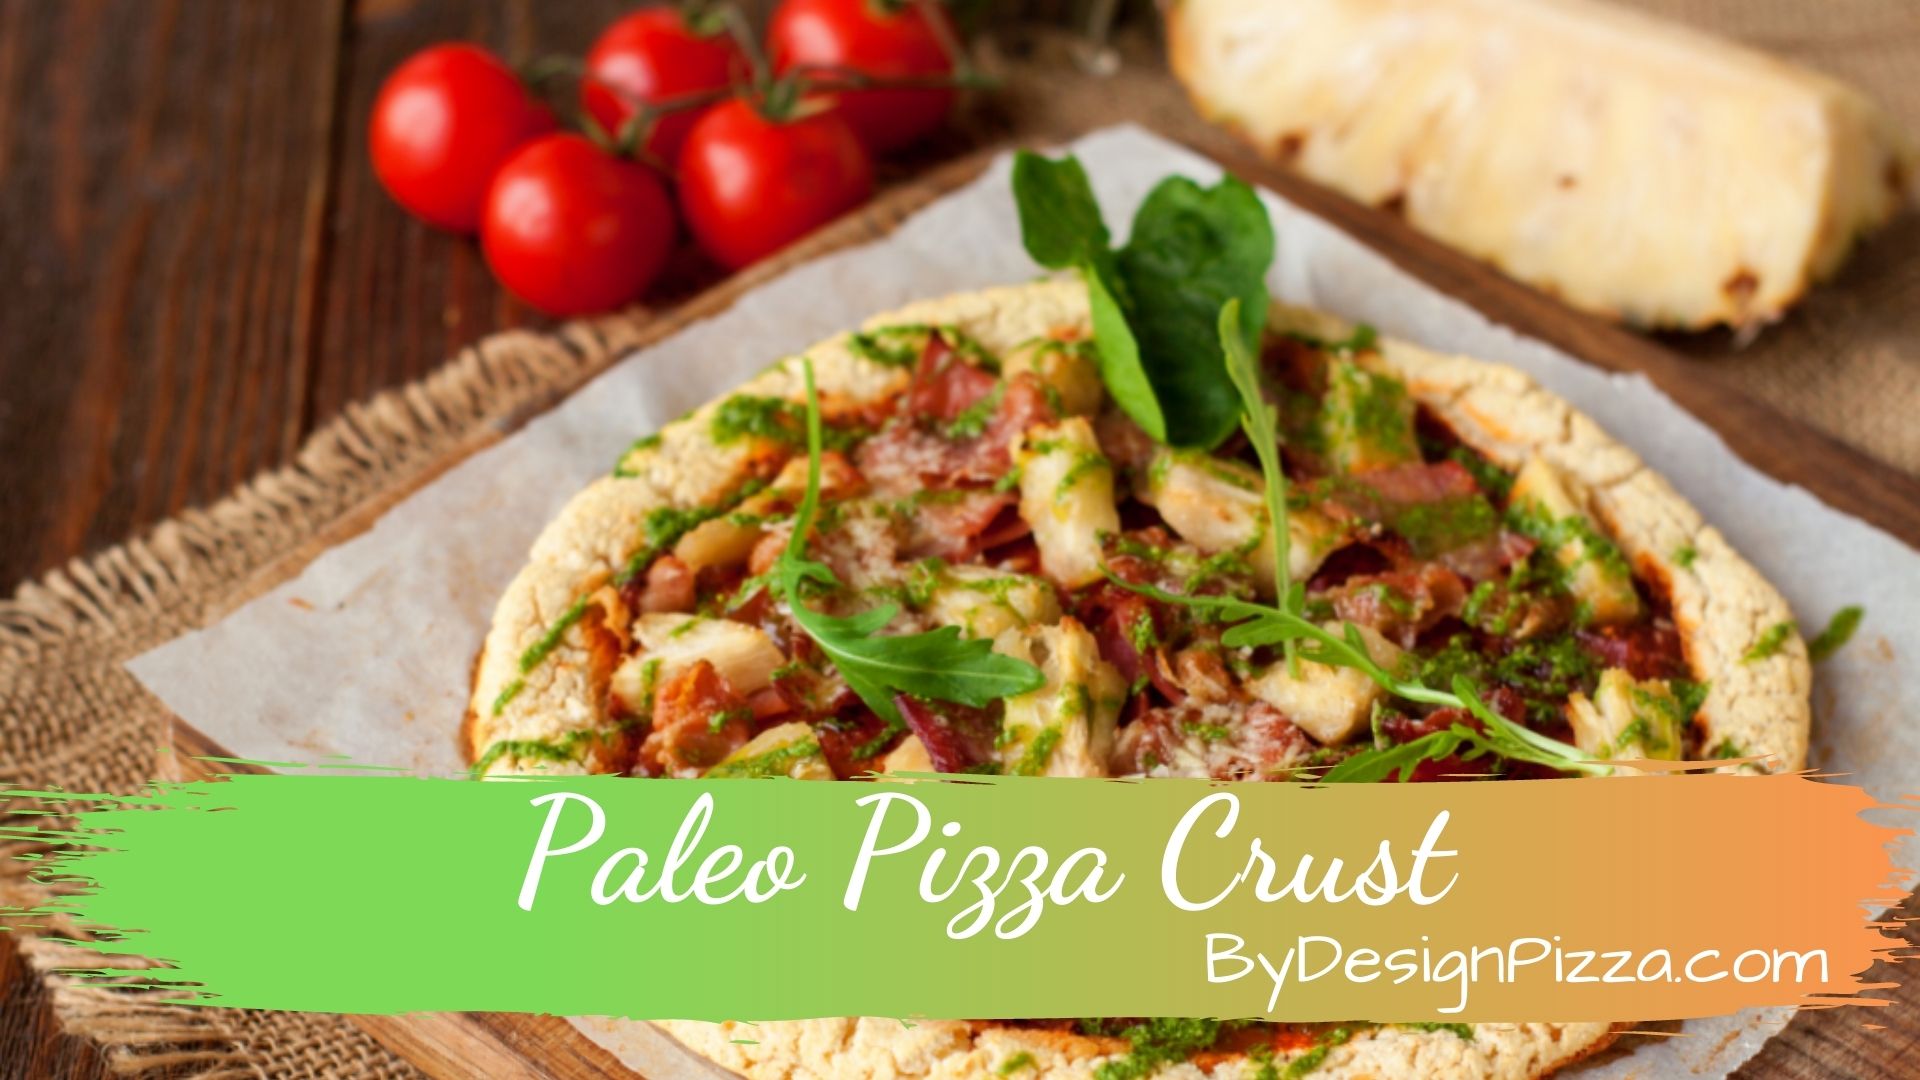 How To Make Paleo Pizza Dough?